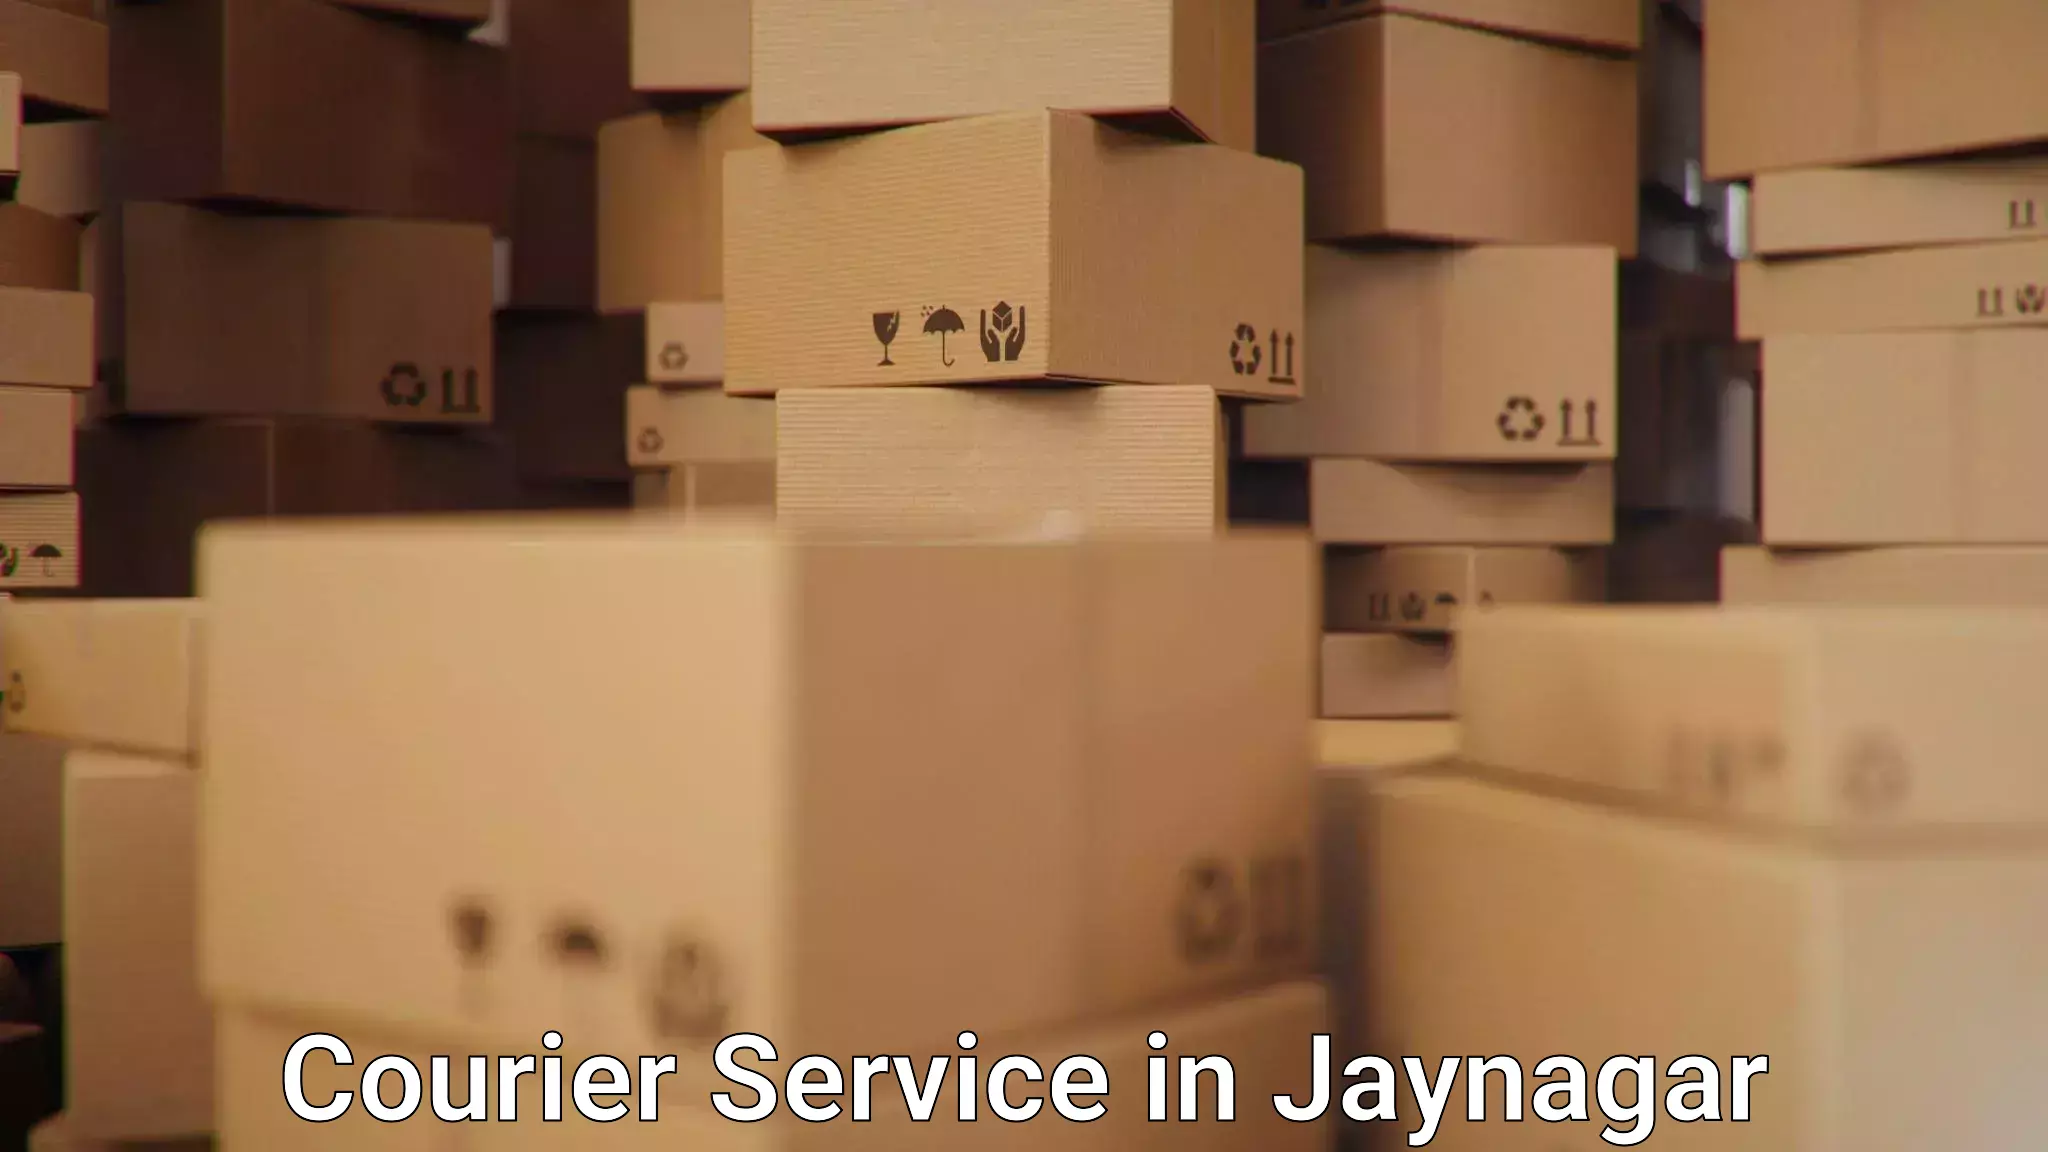 Courier service efficiency in Jaynagar